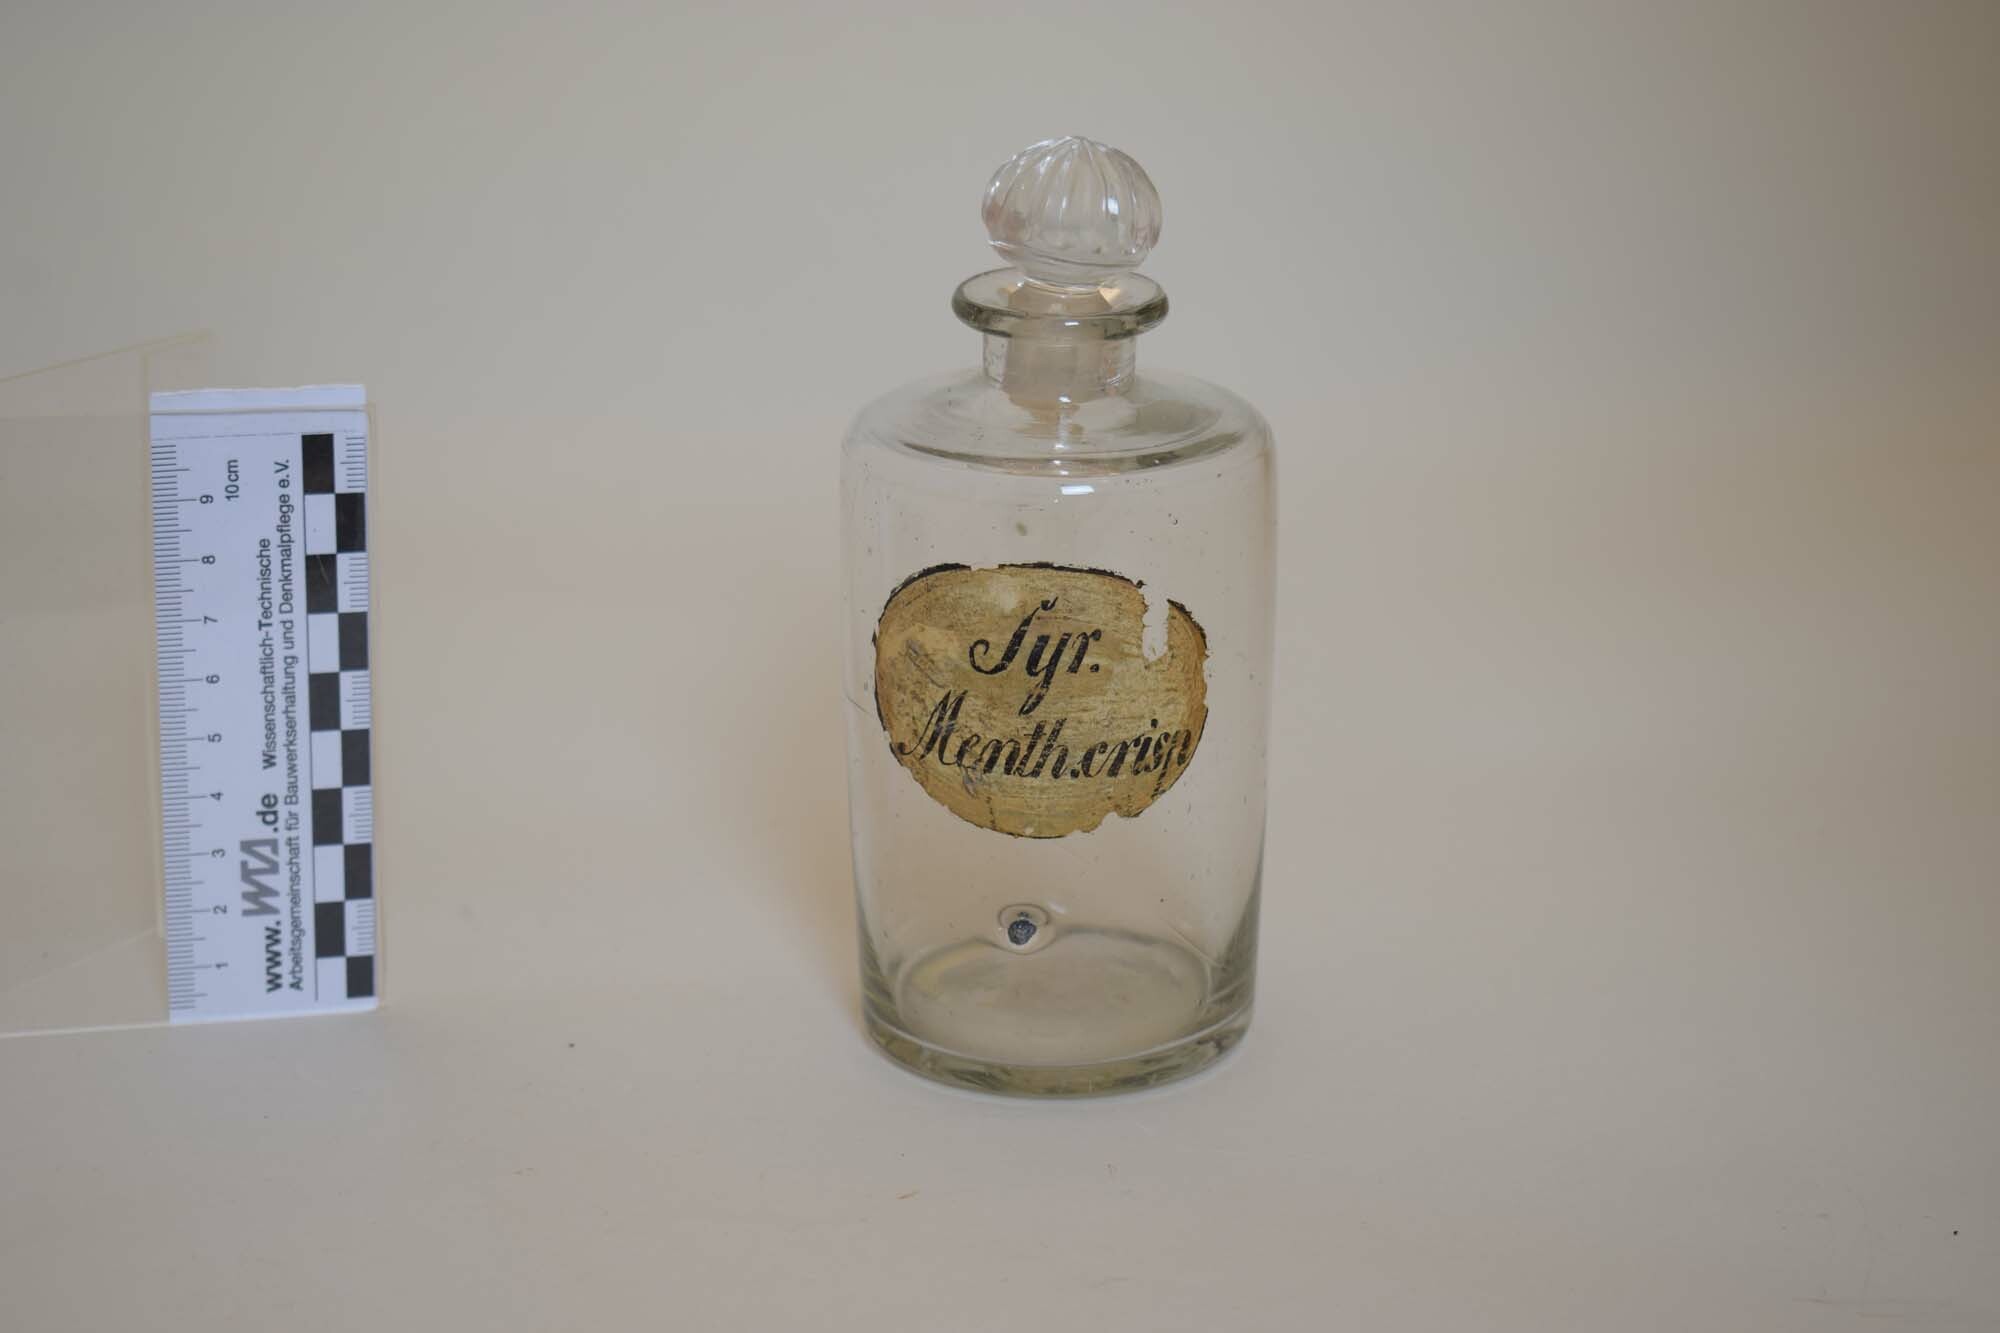 Apothekenflasche "Syr. Menth. crisp" (Heimatmuseum Dohna CC BY-NC-SA)